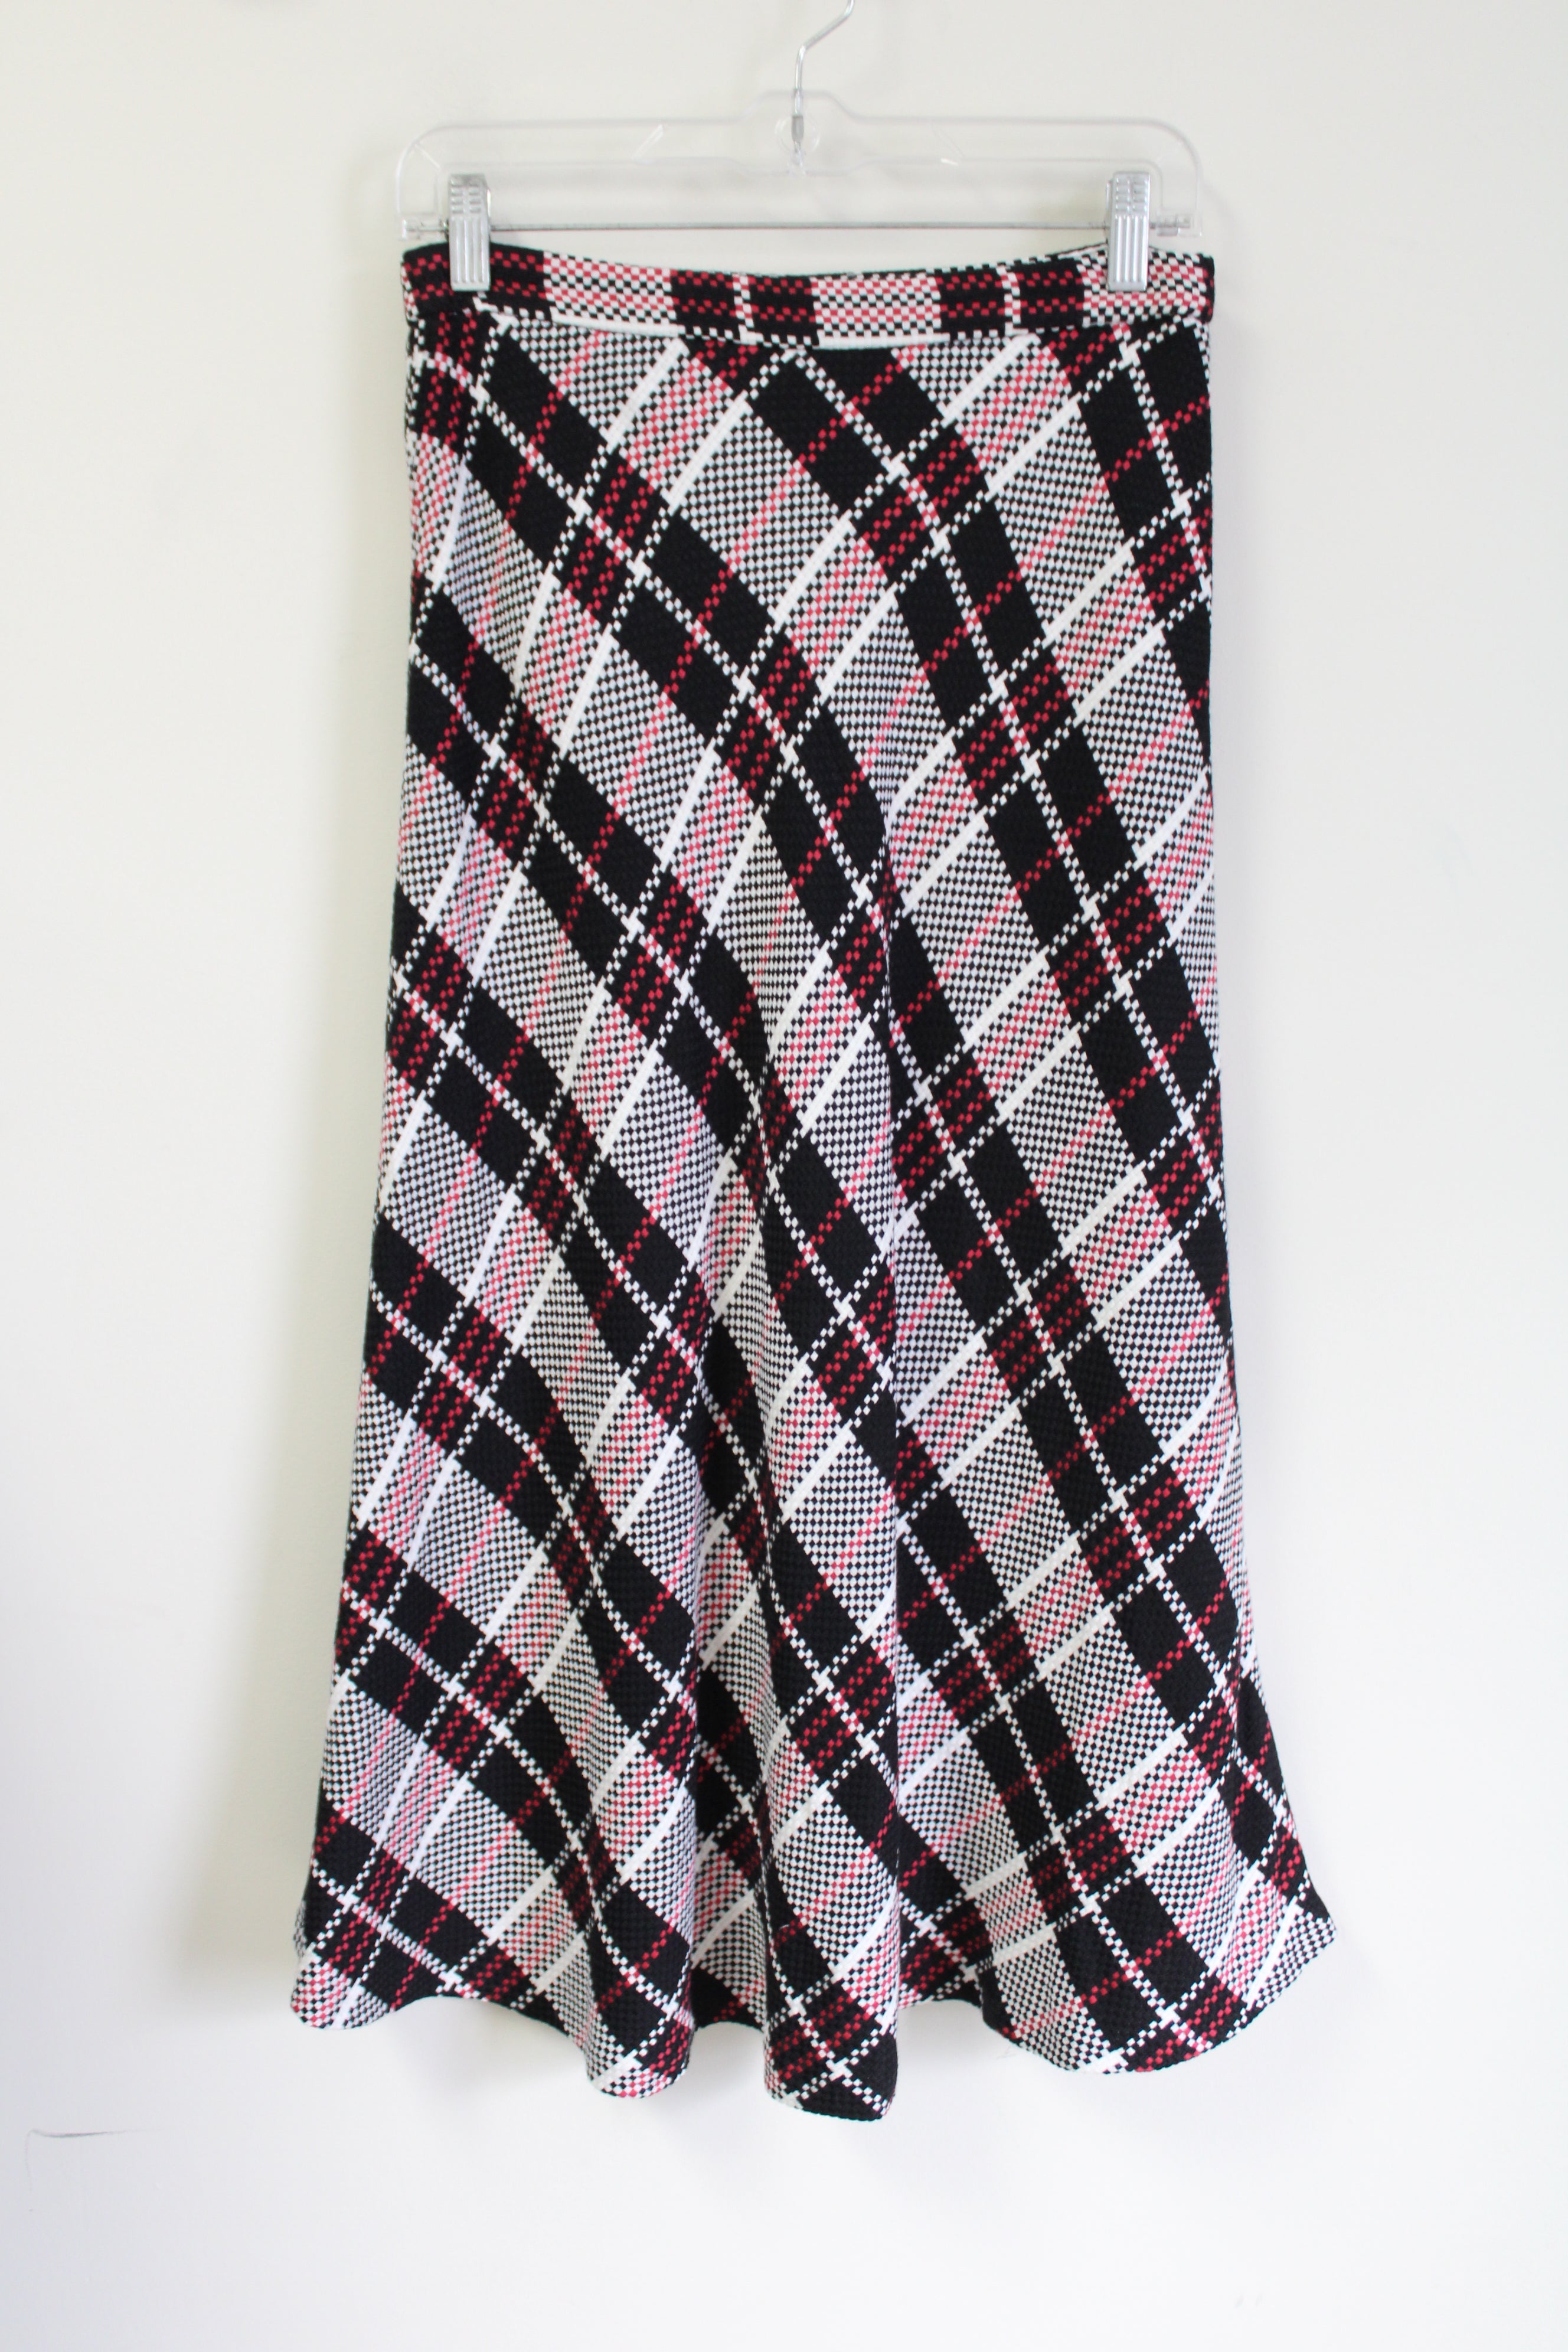 Premise Black White & Pink Plaid Long Skirt | 4